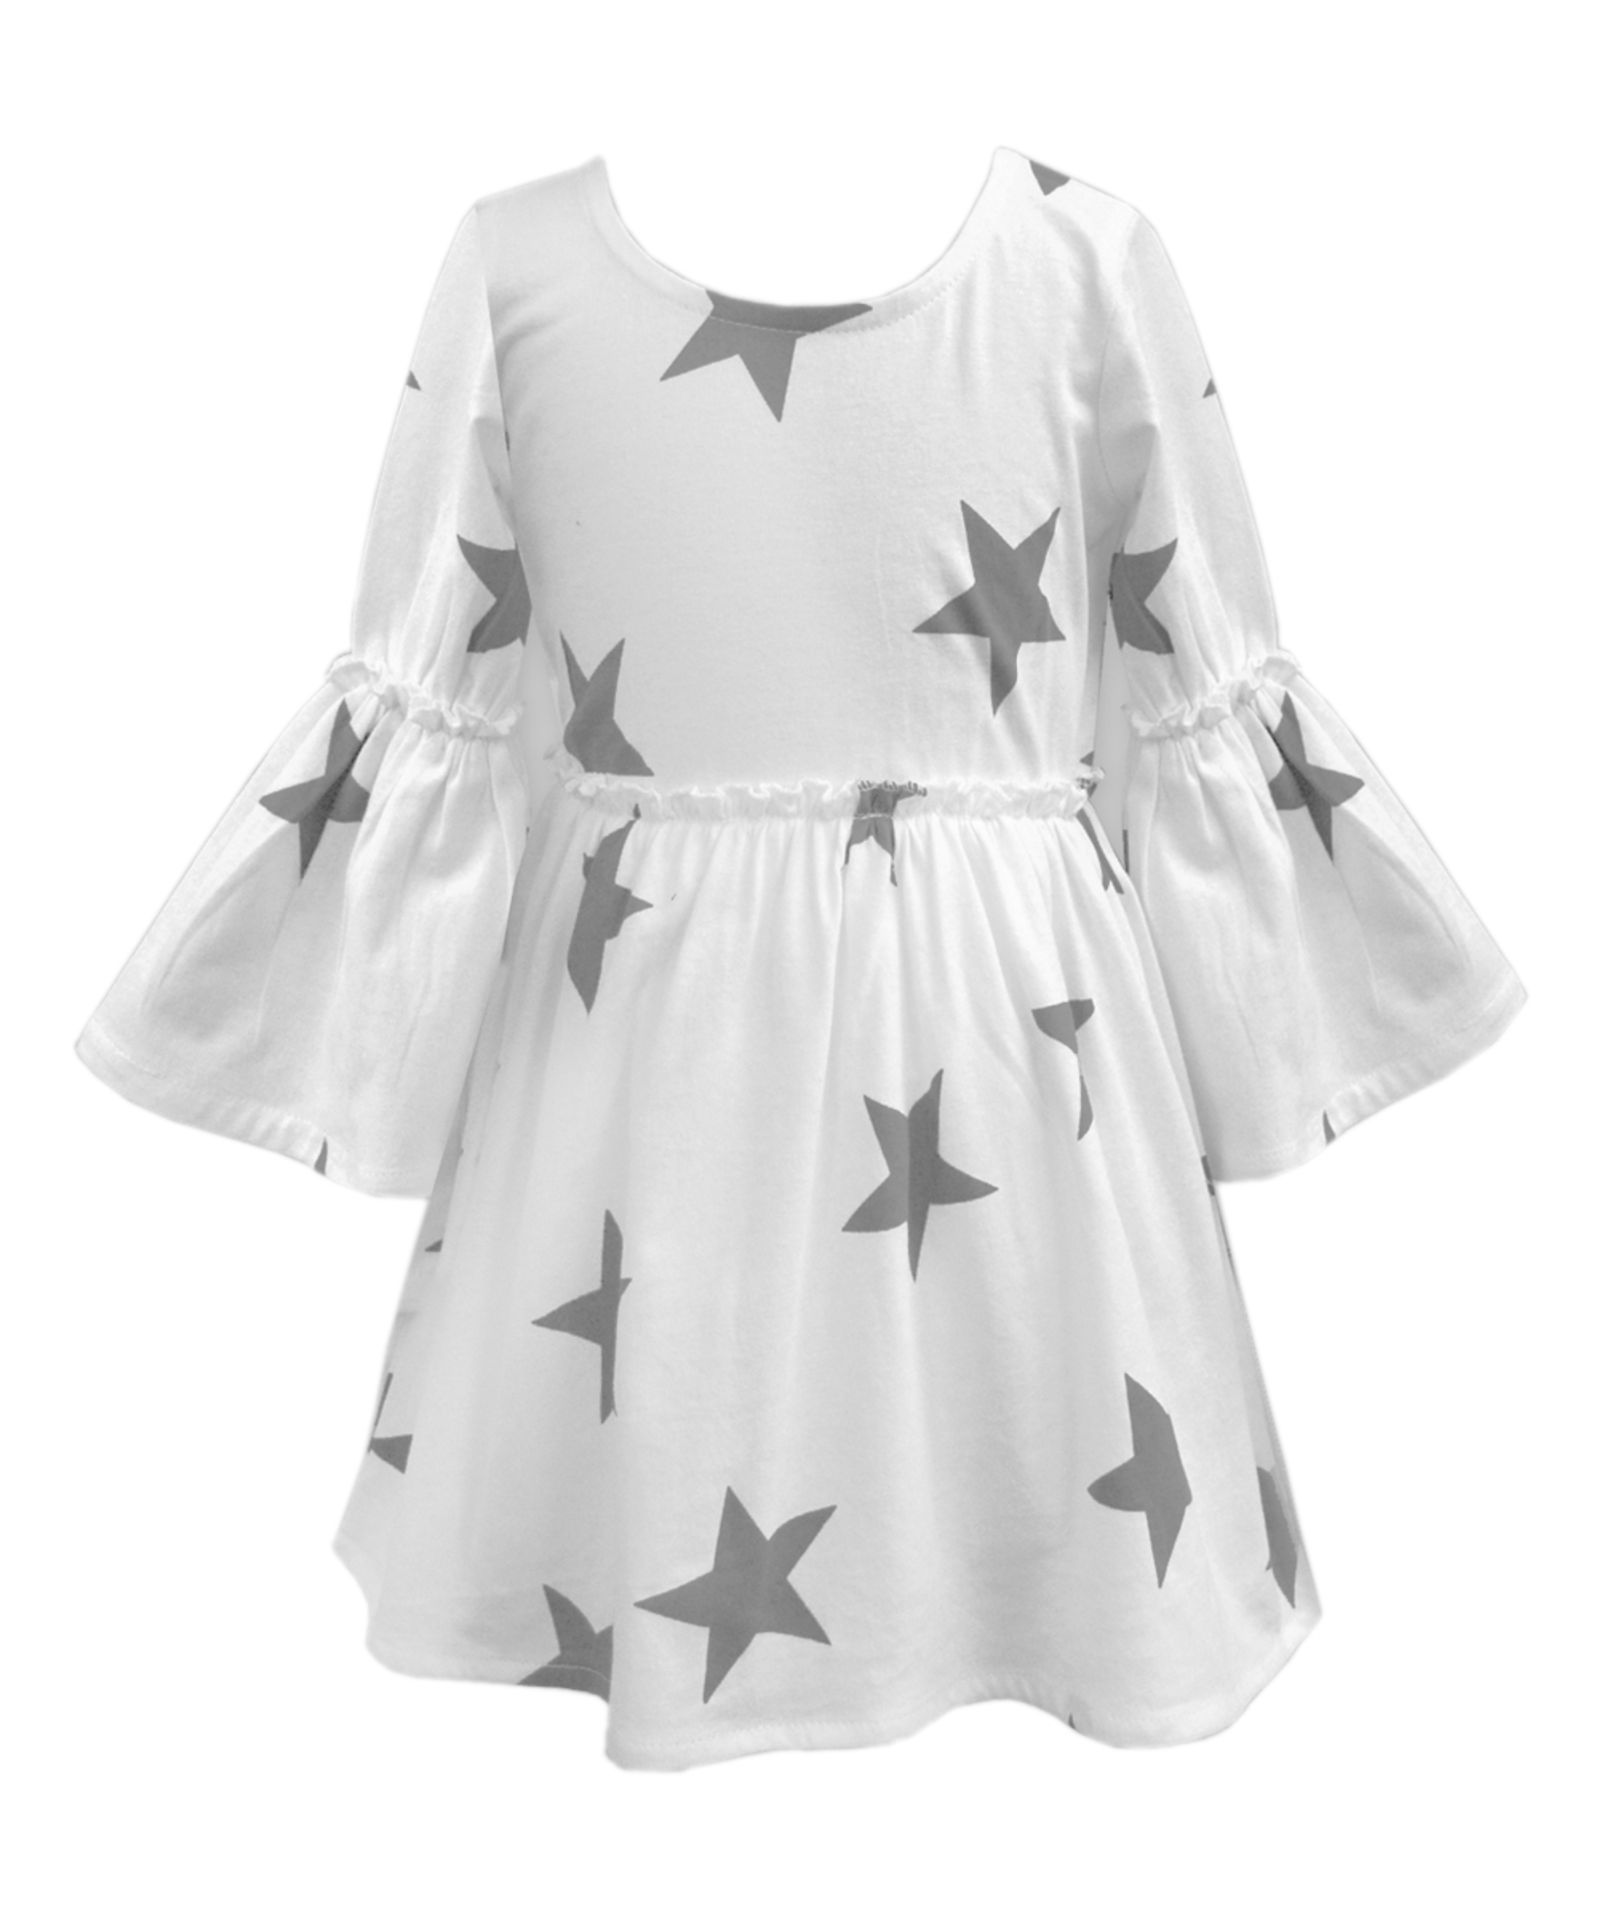 White & Gray Star A-Line Dress - Infant, Toddler & Girls - Image 2 of 2